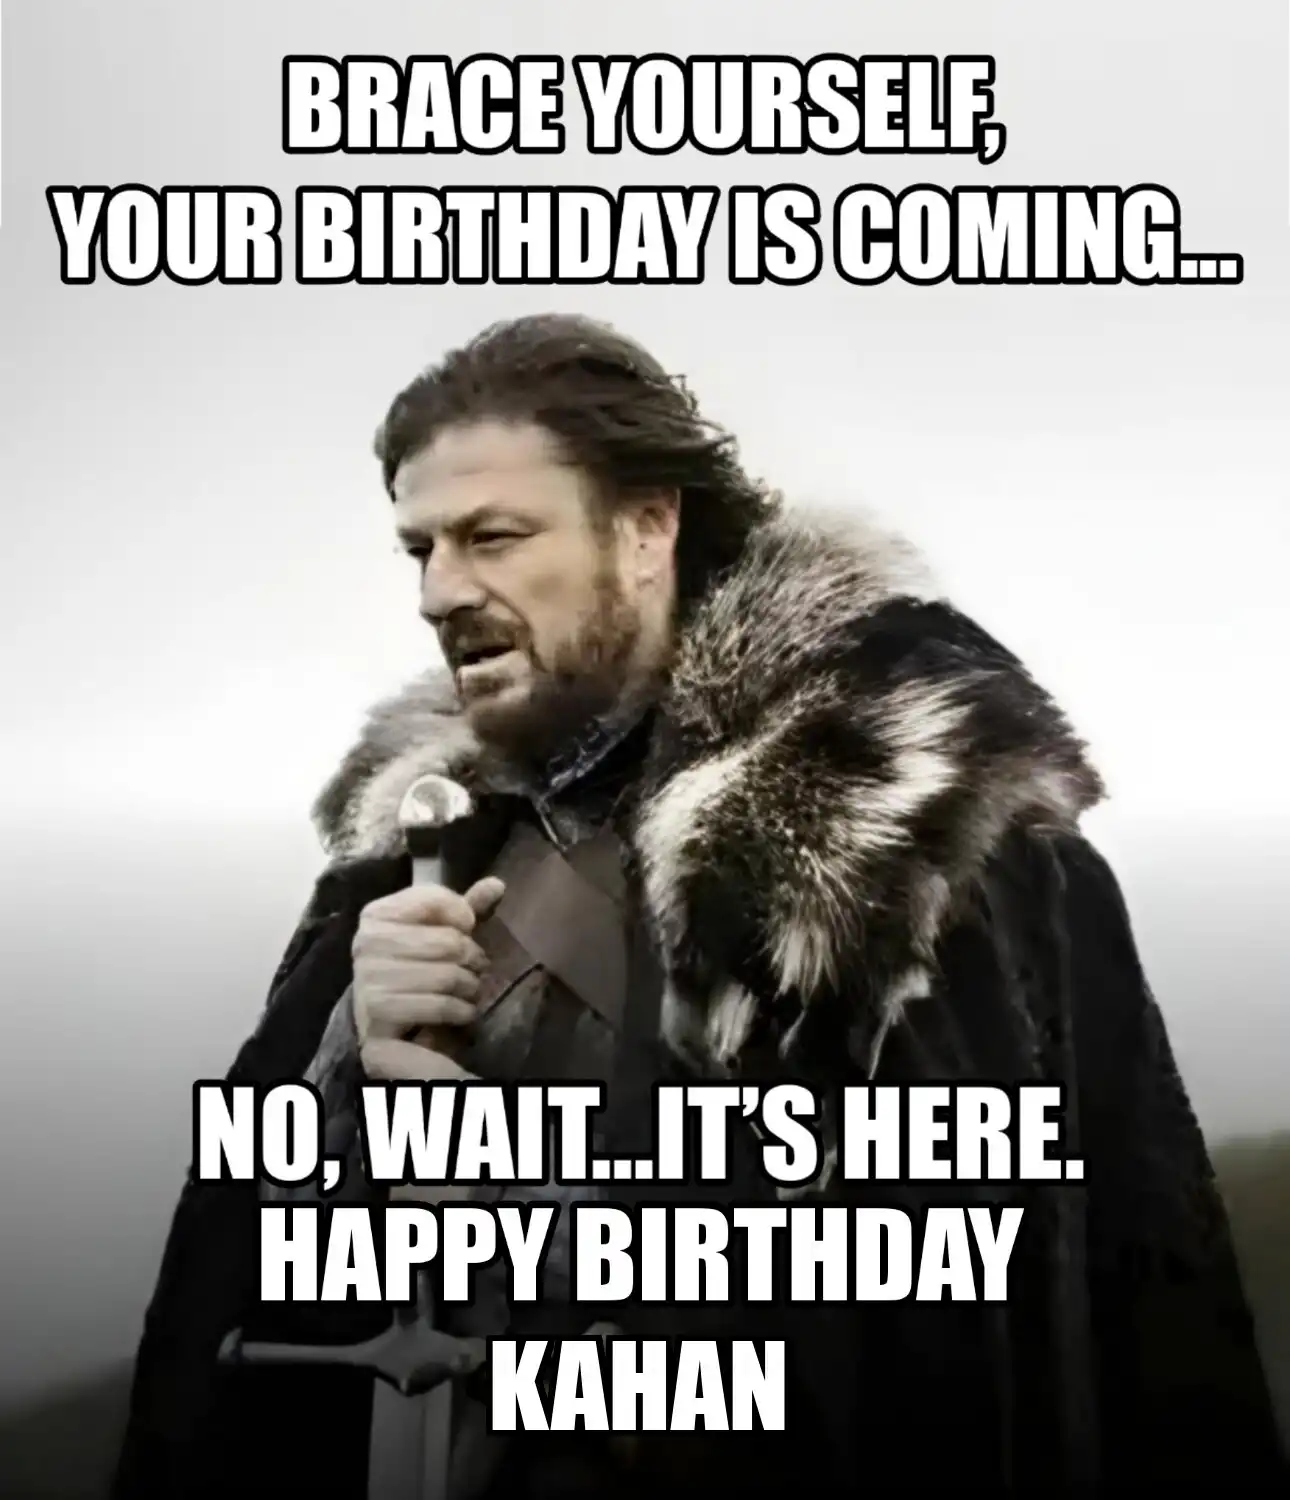 Happy Birthday Kahan Brace Yourself Your Birthday Is Coming Meme